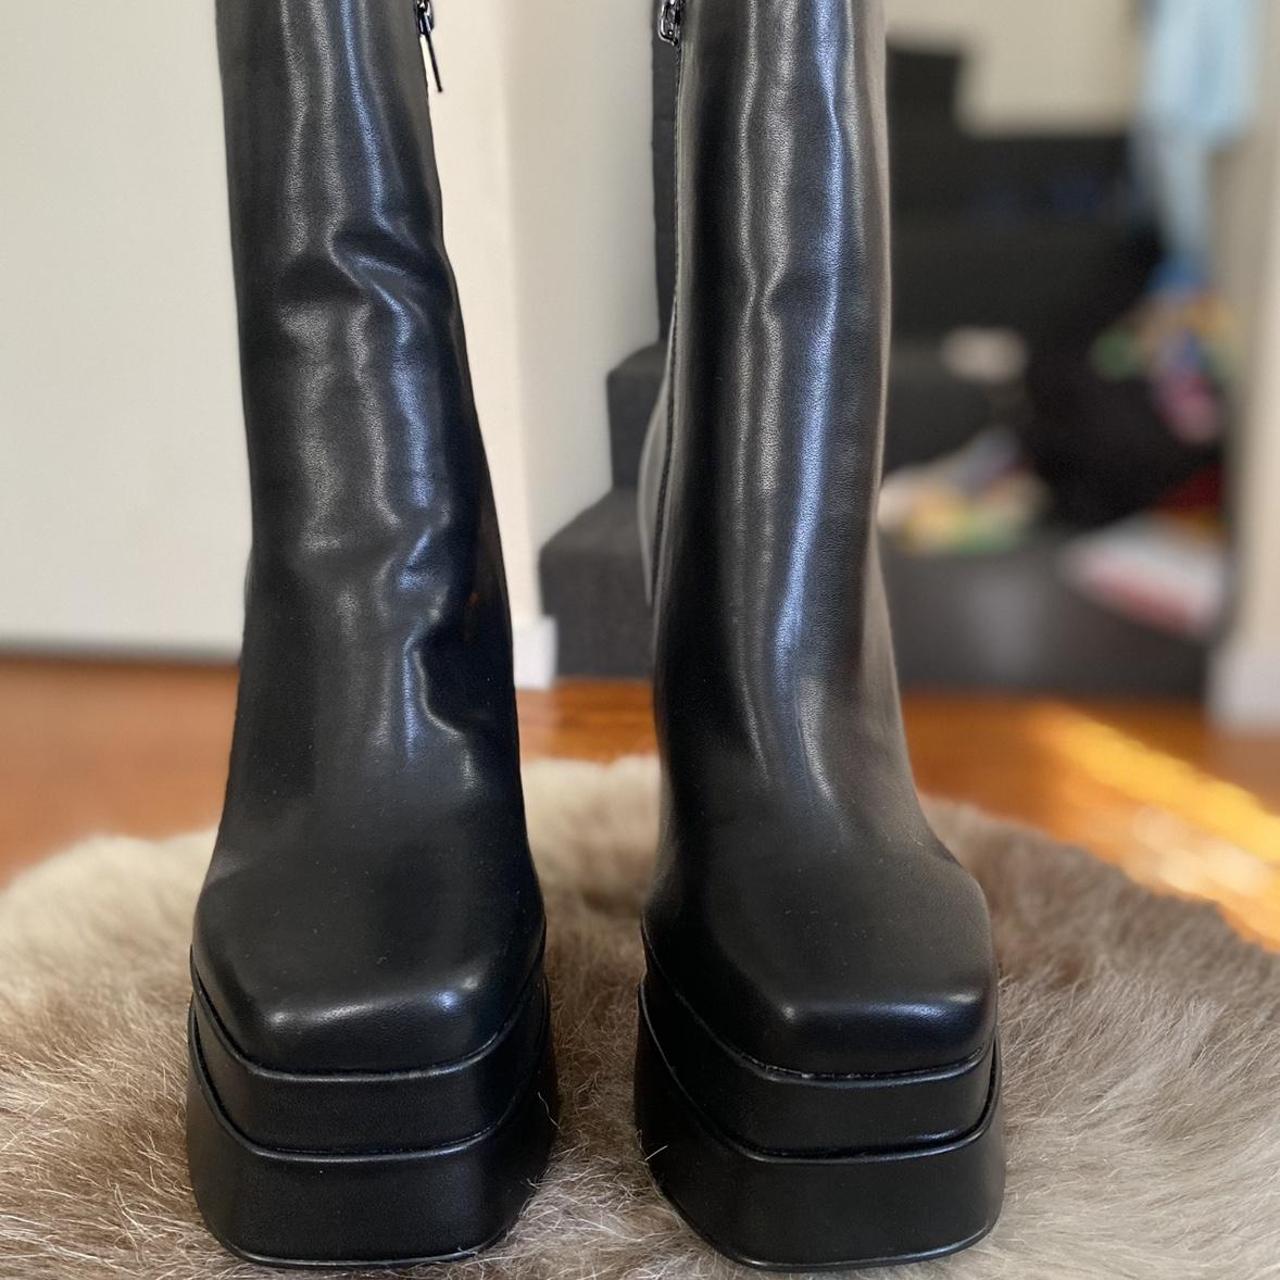 Black platform heel boots - Depop